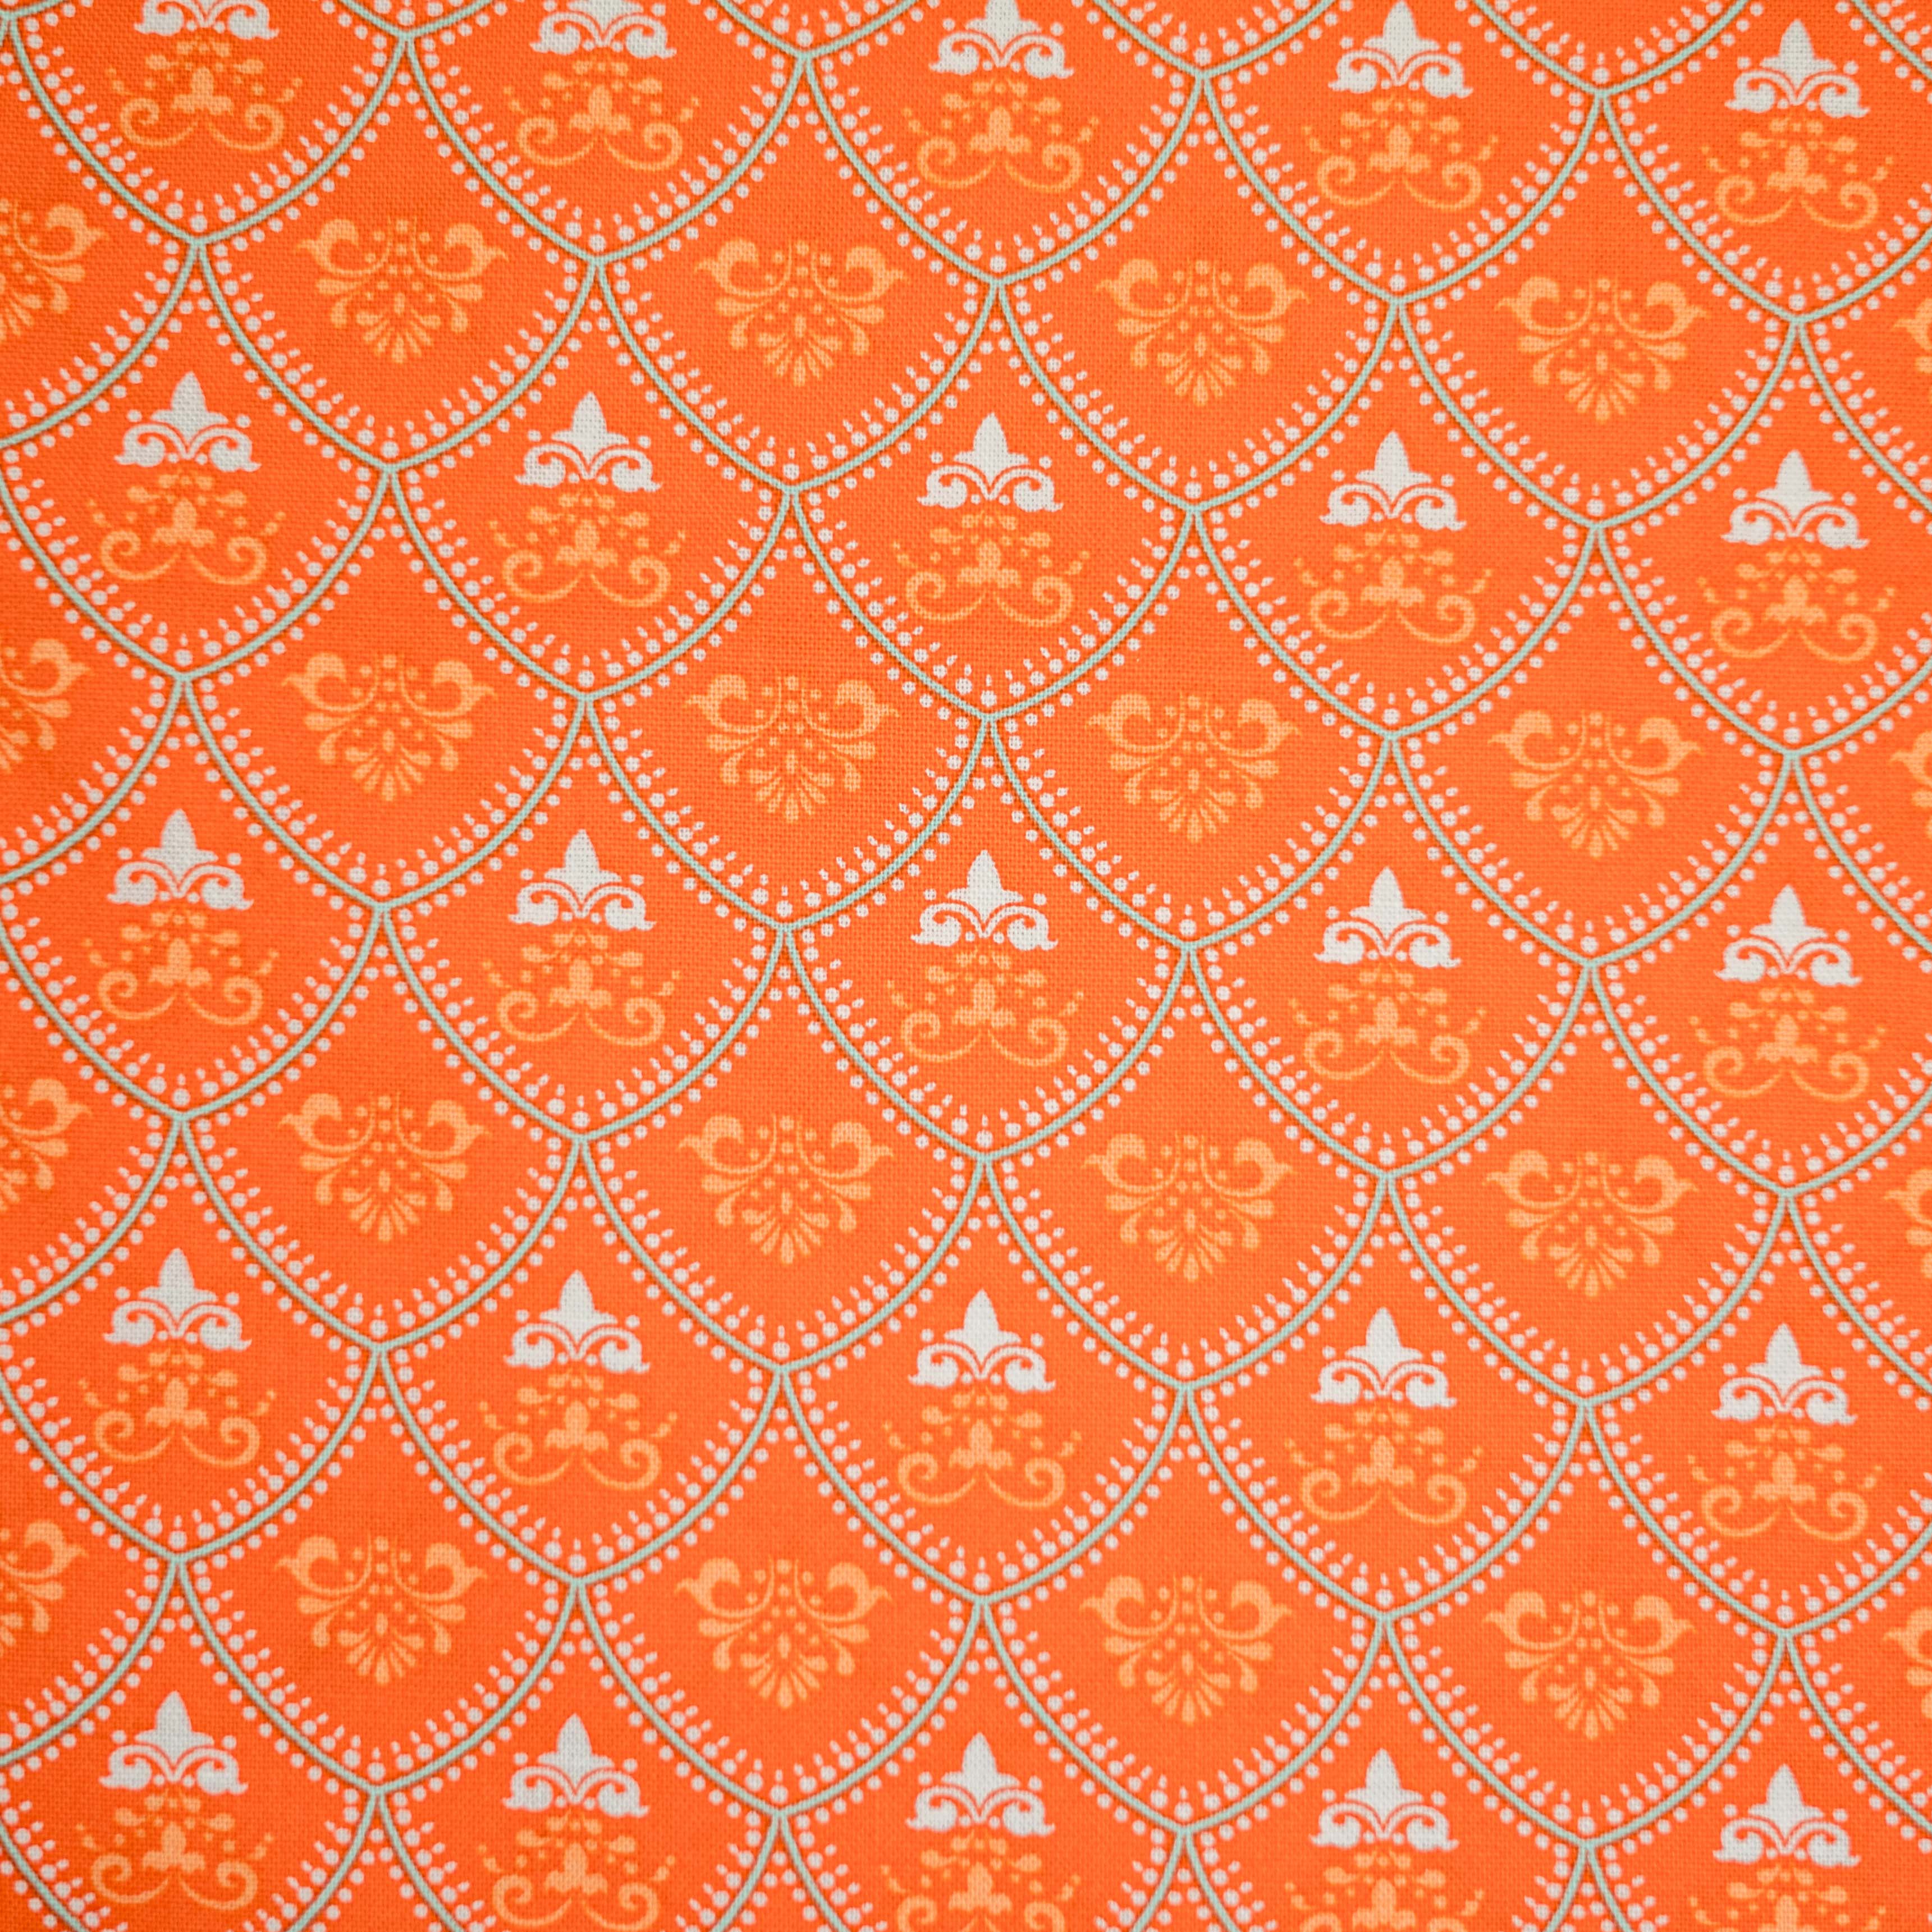 Baumwollstoff Wappenmuster auf orange Klaranähta